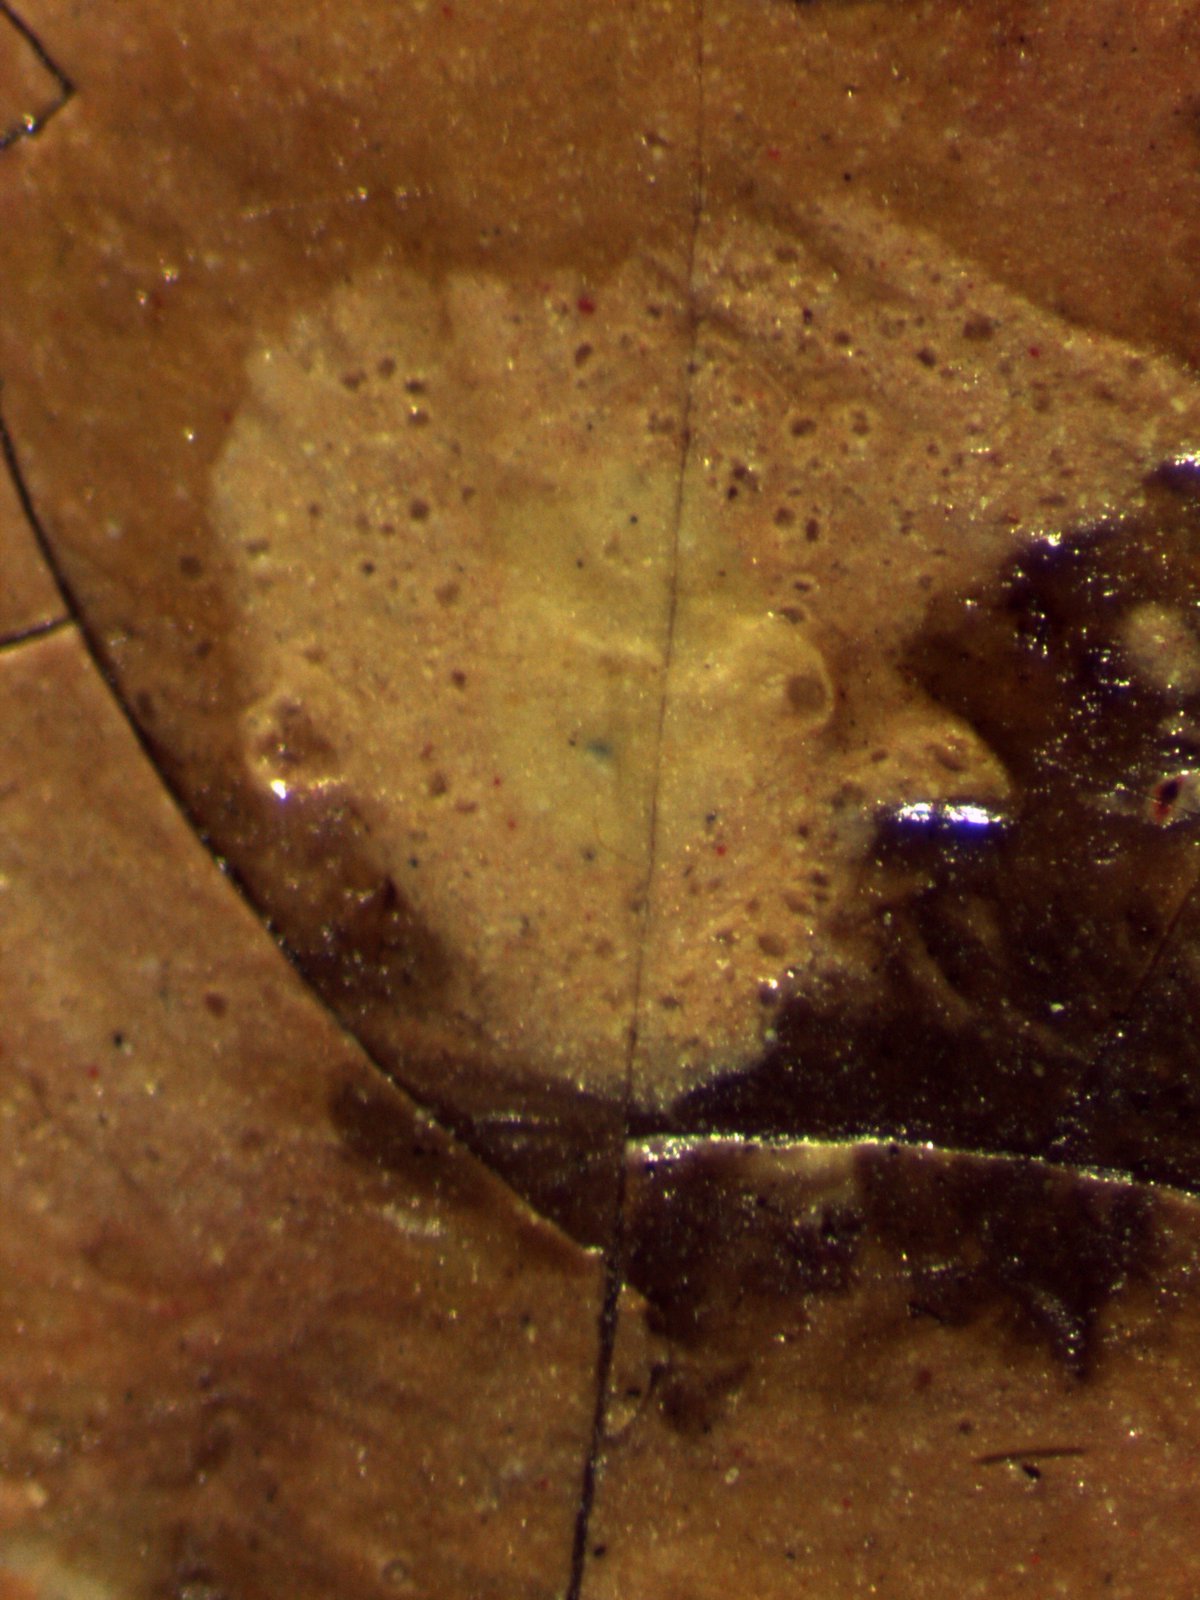 Sandon Hall Cuyp tr microscoop gezicht rechts na vernisafname neus grootste vergroting 4-2020.jpg